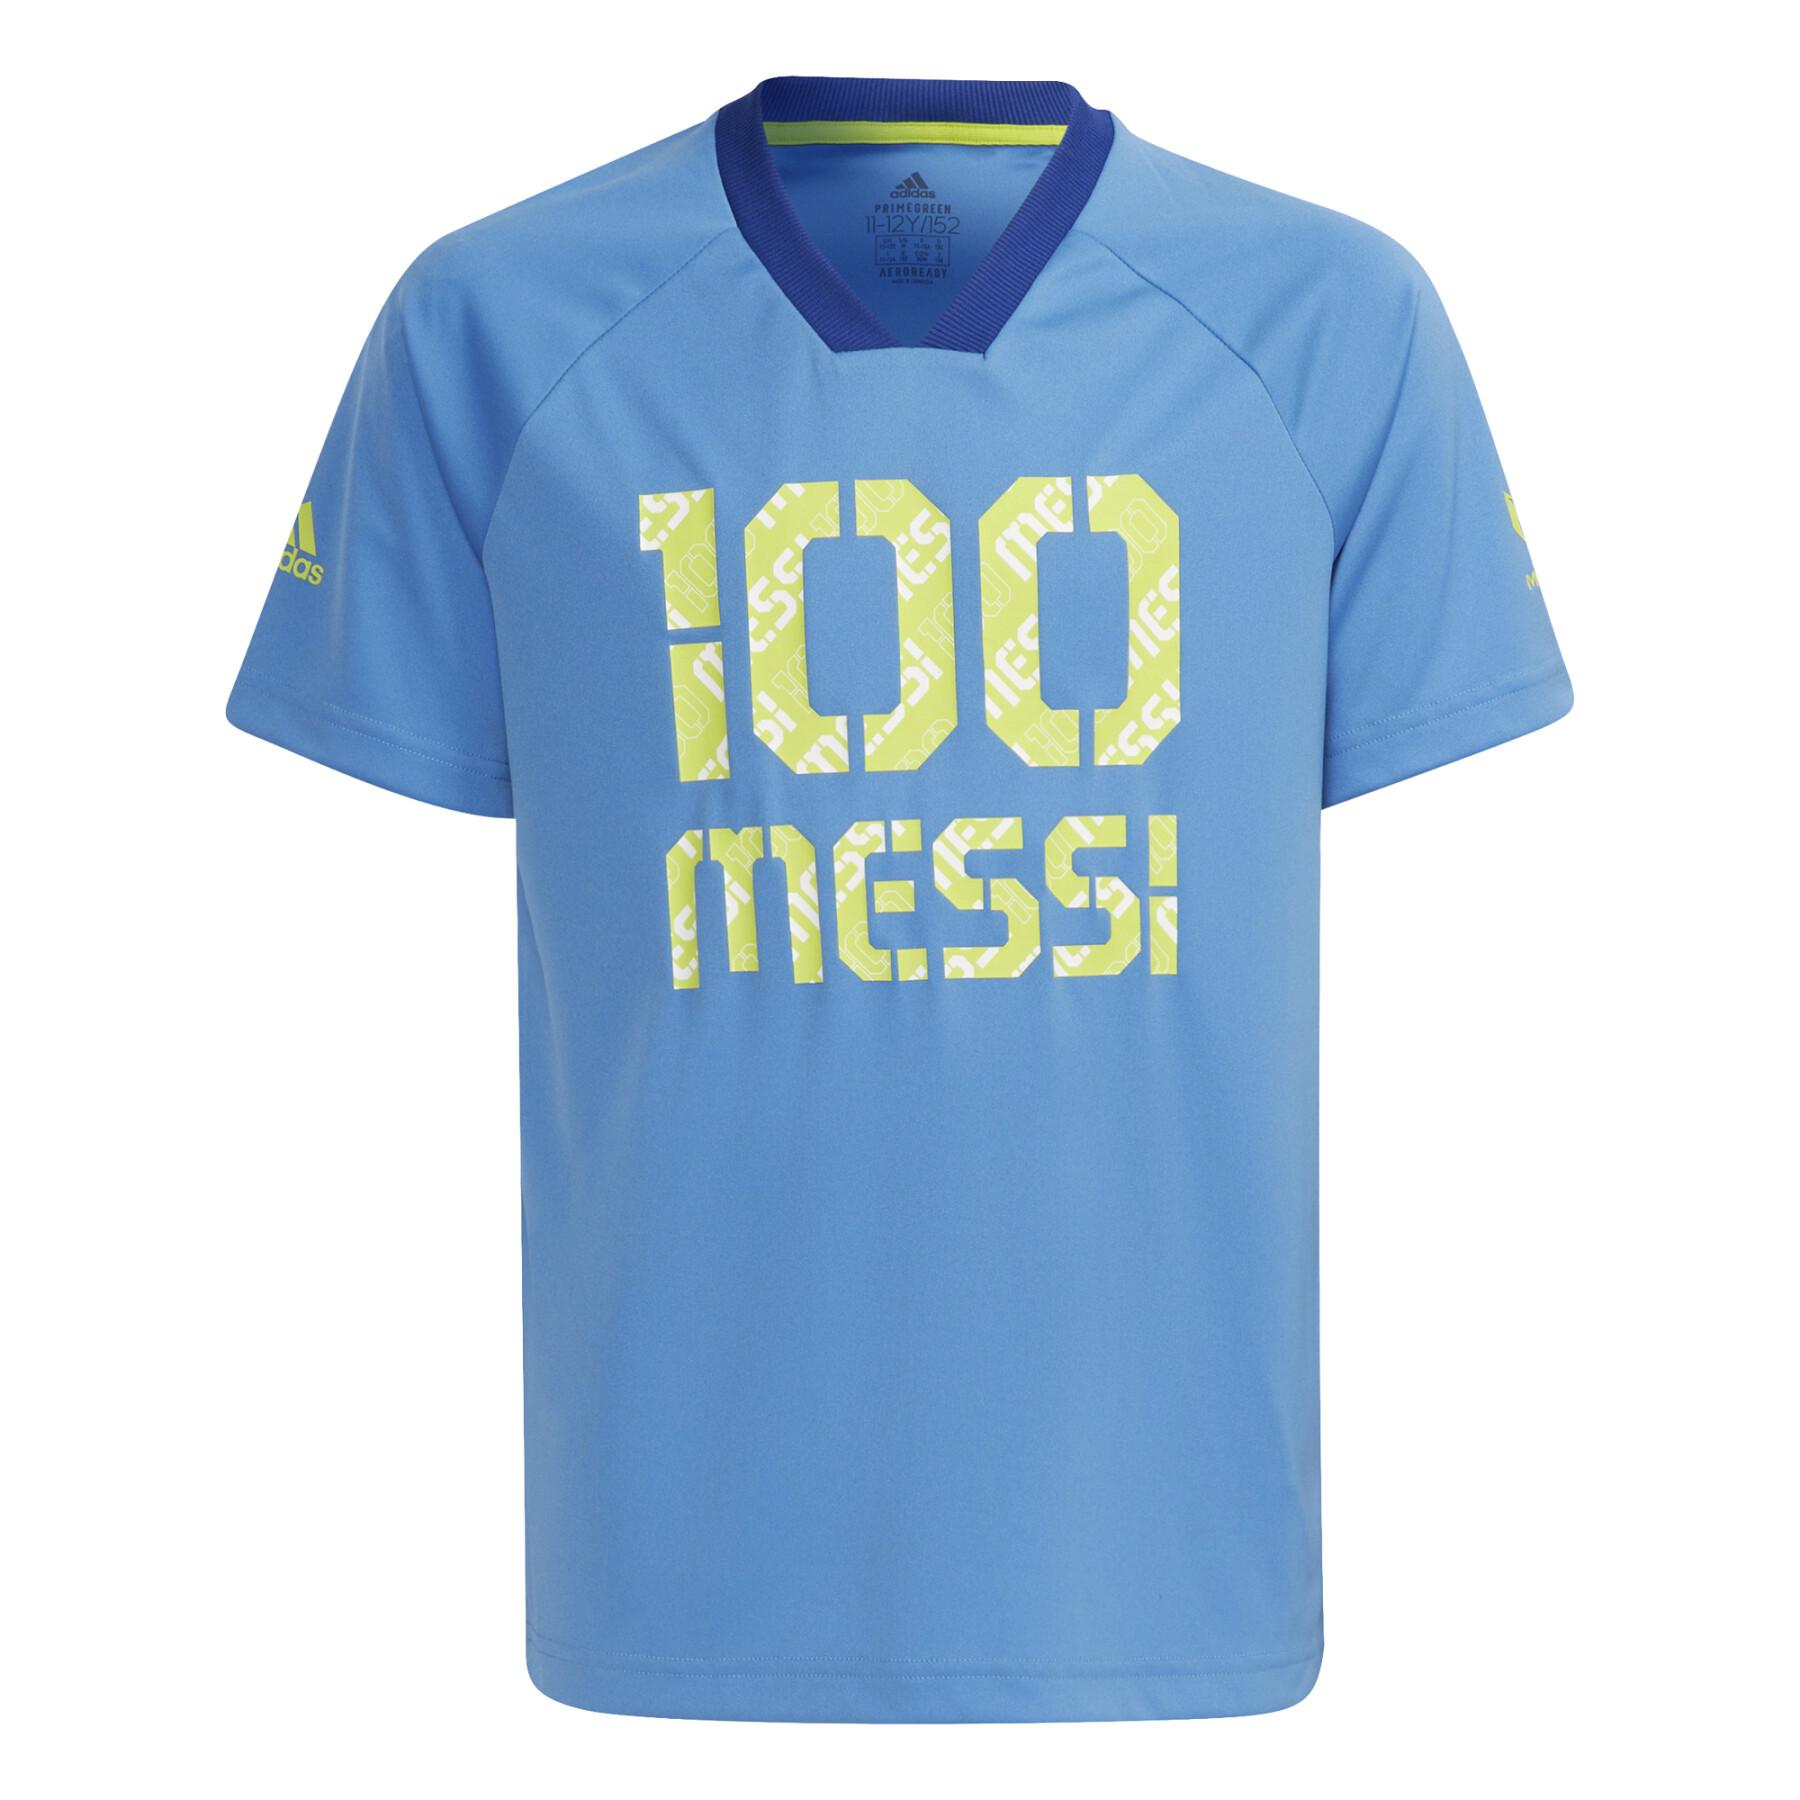 Survêtement enfant adidas Messi Football-Inspired Summer Set